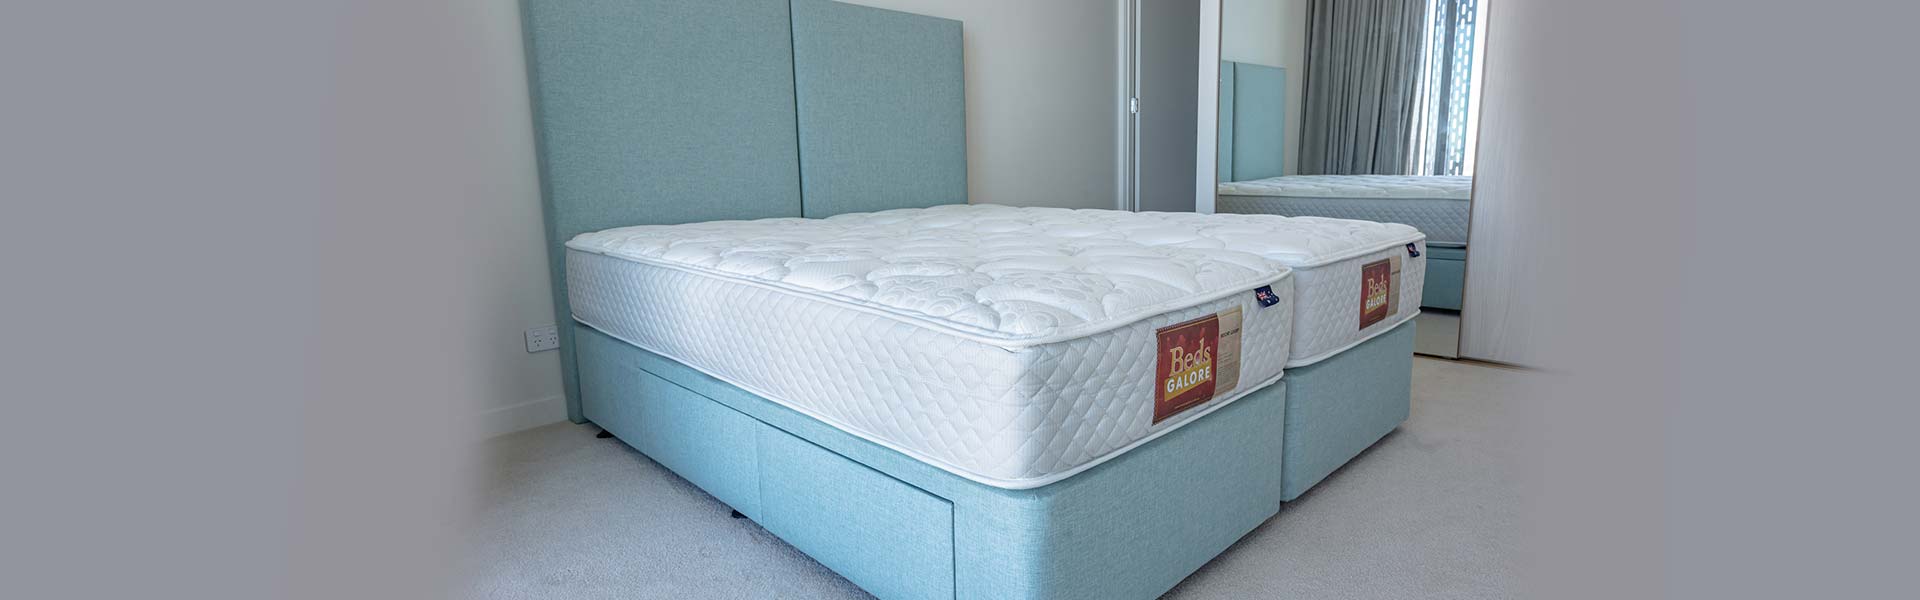 King Split Mattress, Australian Standard Double Bed Mattress Size